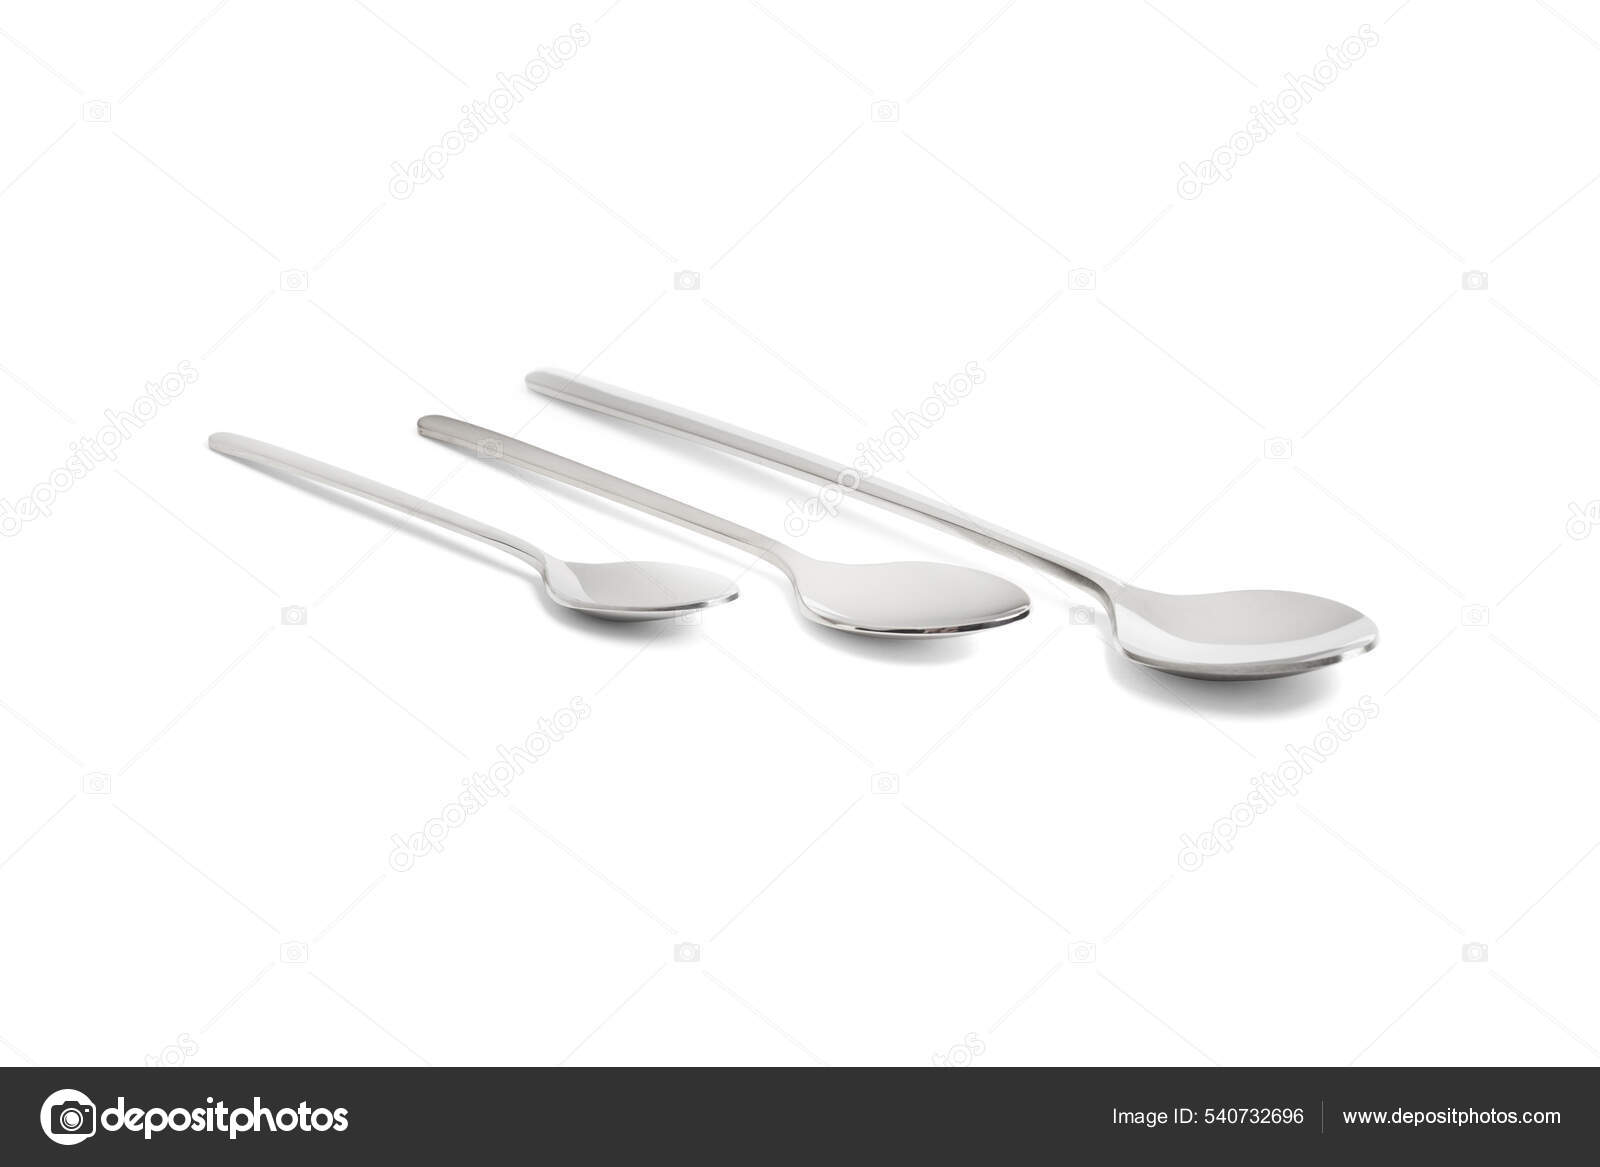 https://st.depositphotos.com/59770376/54073/i/1600/depositphotos_540732696-stock-photo-clean-shiny-metal-spoon-isolated.jpg